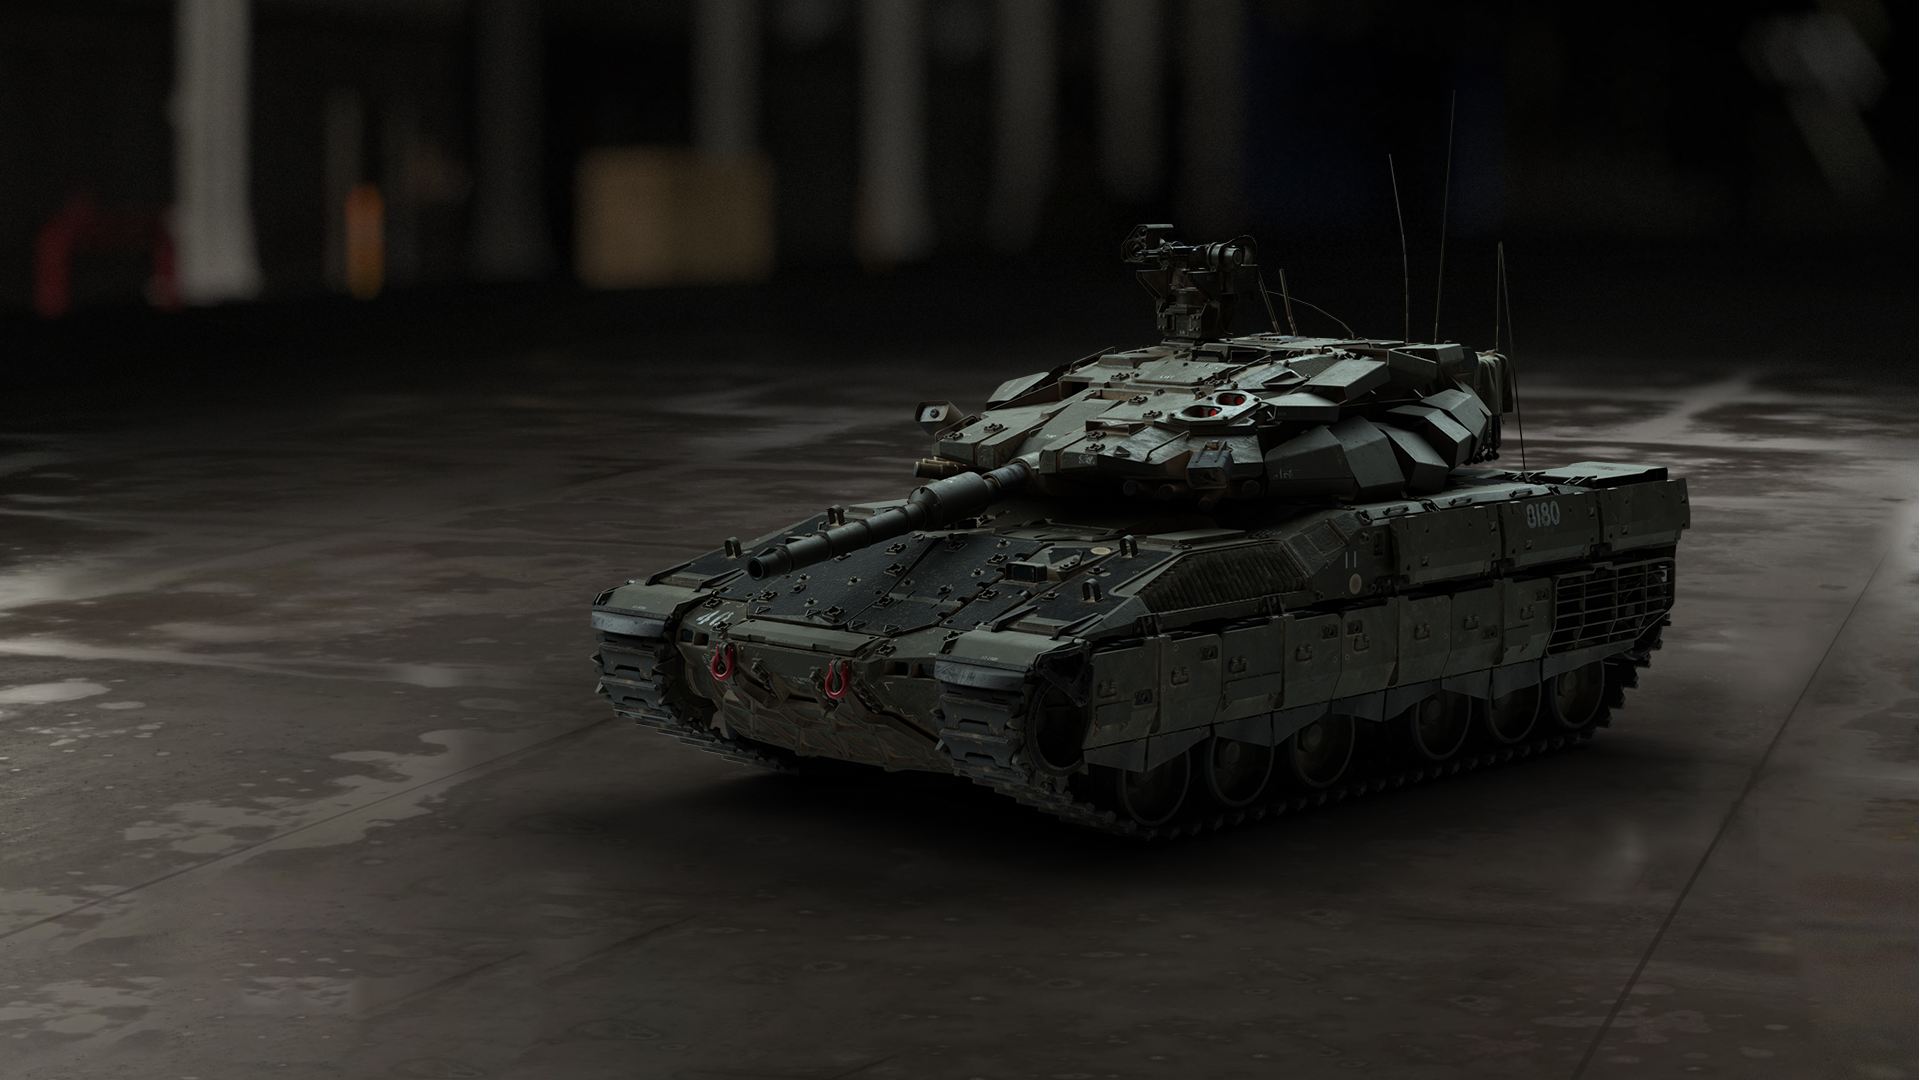 Modern Warfare 2 Vehicles: The heavy tank can be seen